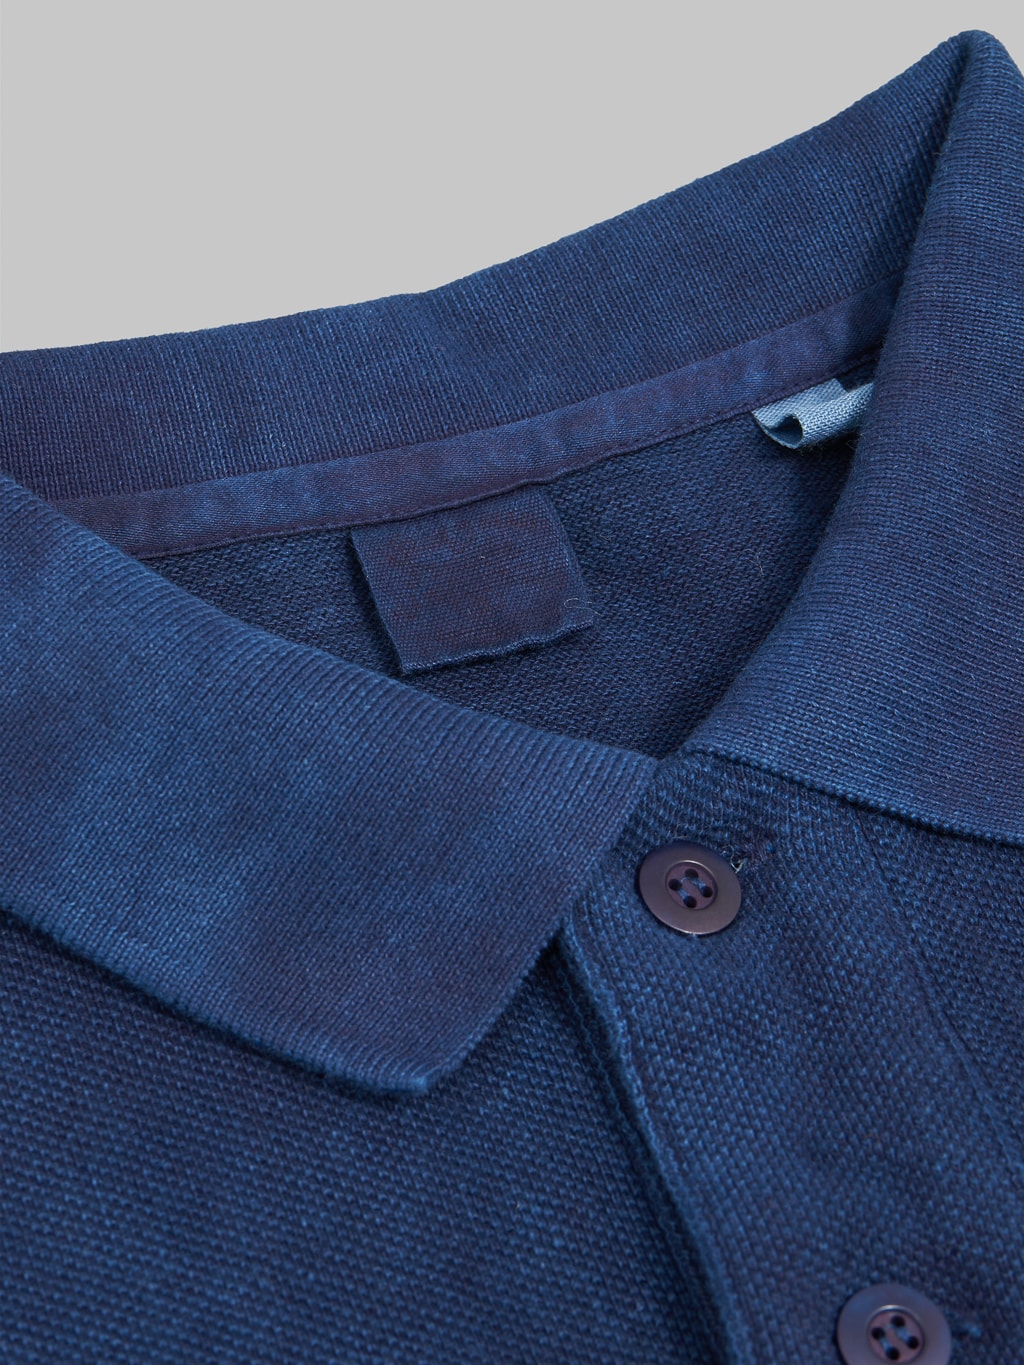 ues polo shirt indigo weft fabric detail